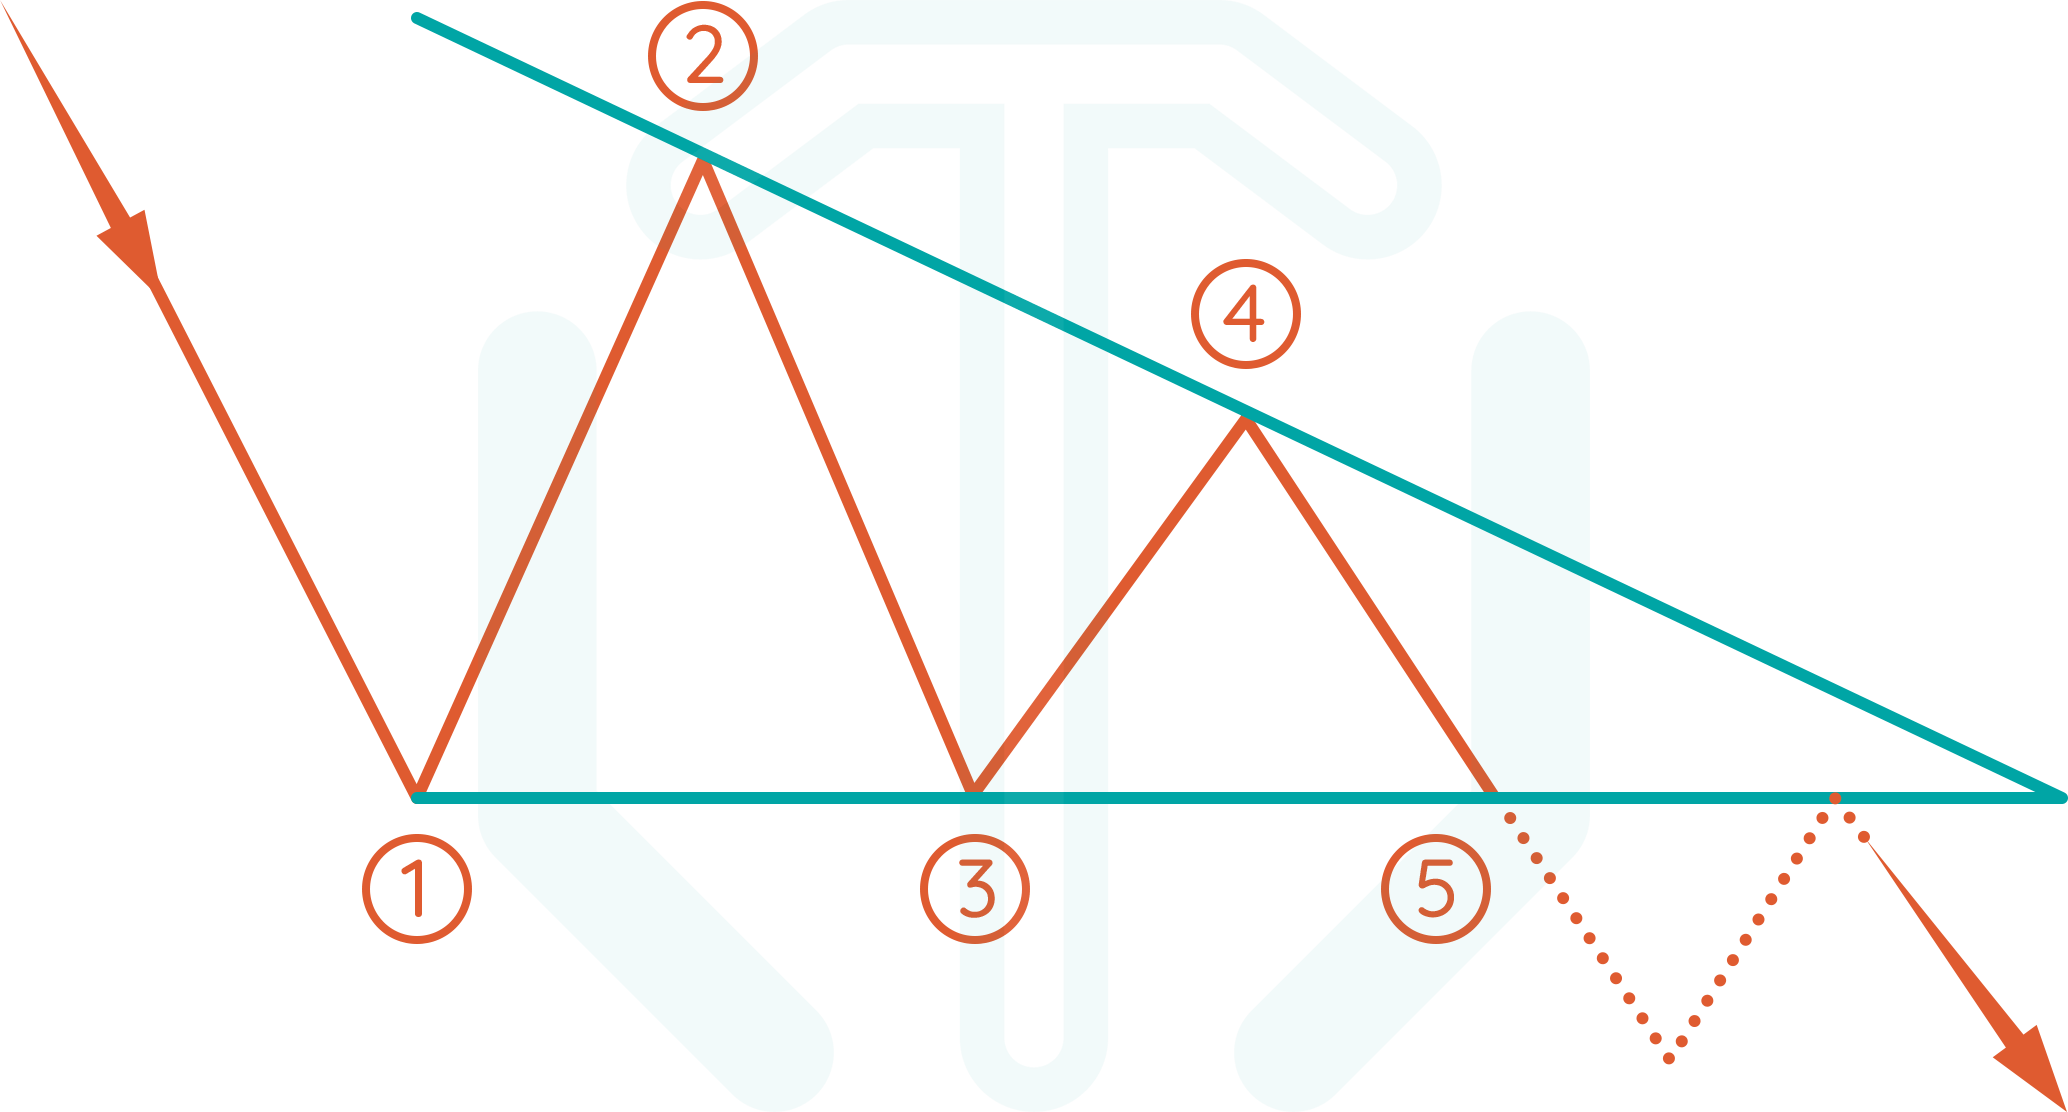 Descending triangle chart pattern illustration